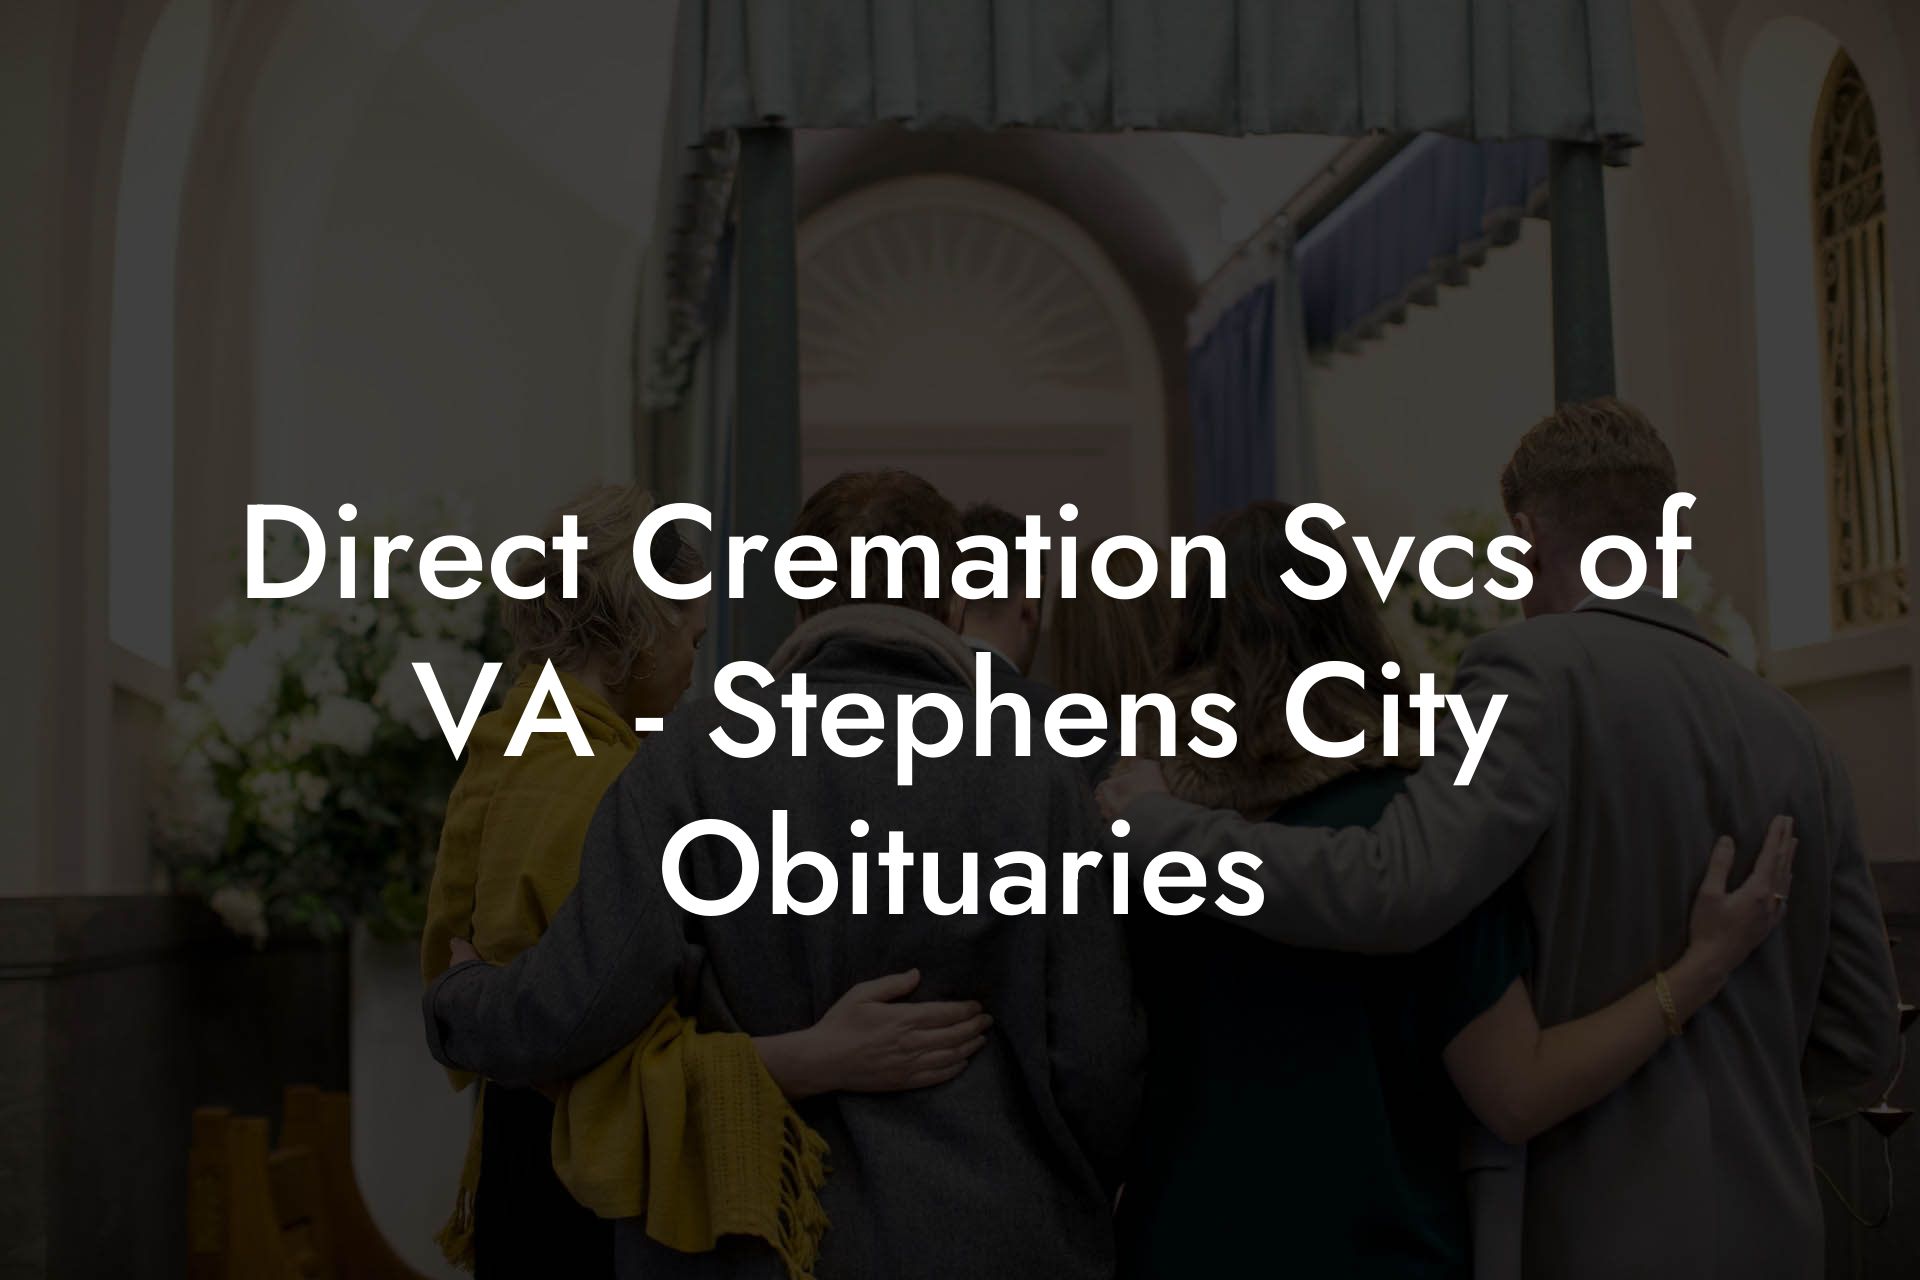 Direct Cremation Svcs of VA - Stephens City Obituaries